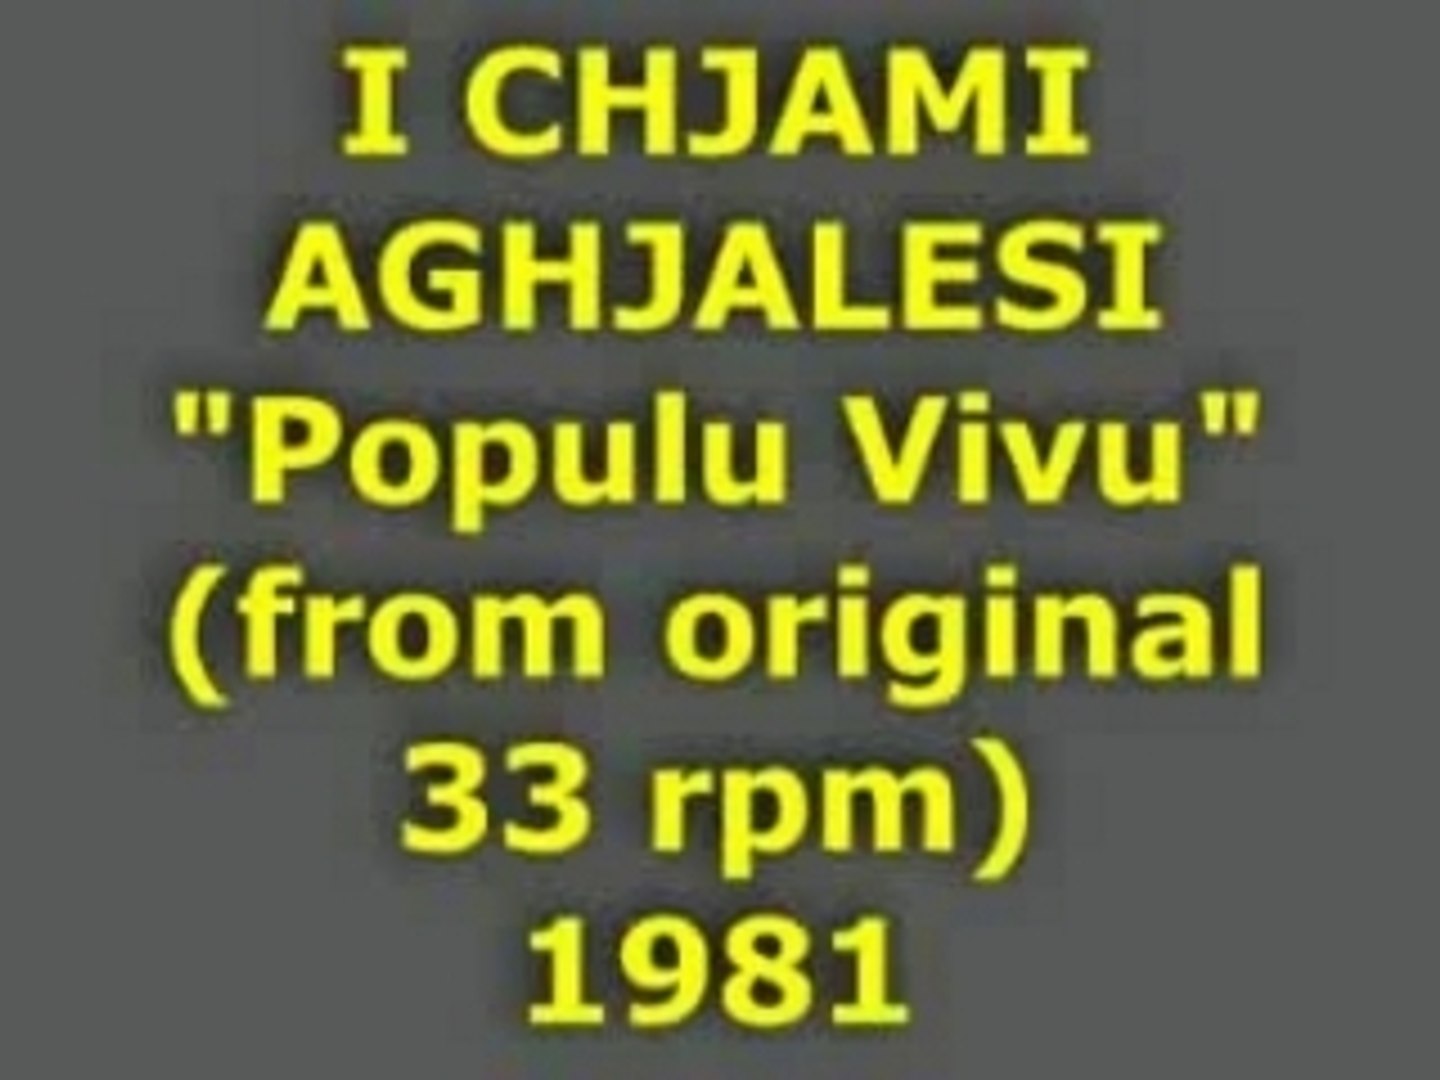 I CHJAMI AGHJALESI "Populu Vivu" 1981 - Vidéo Dailymotion